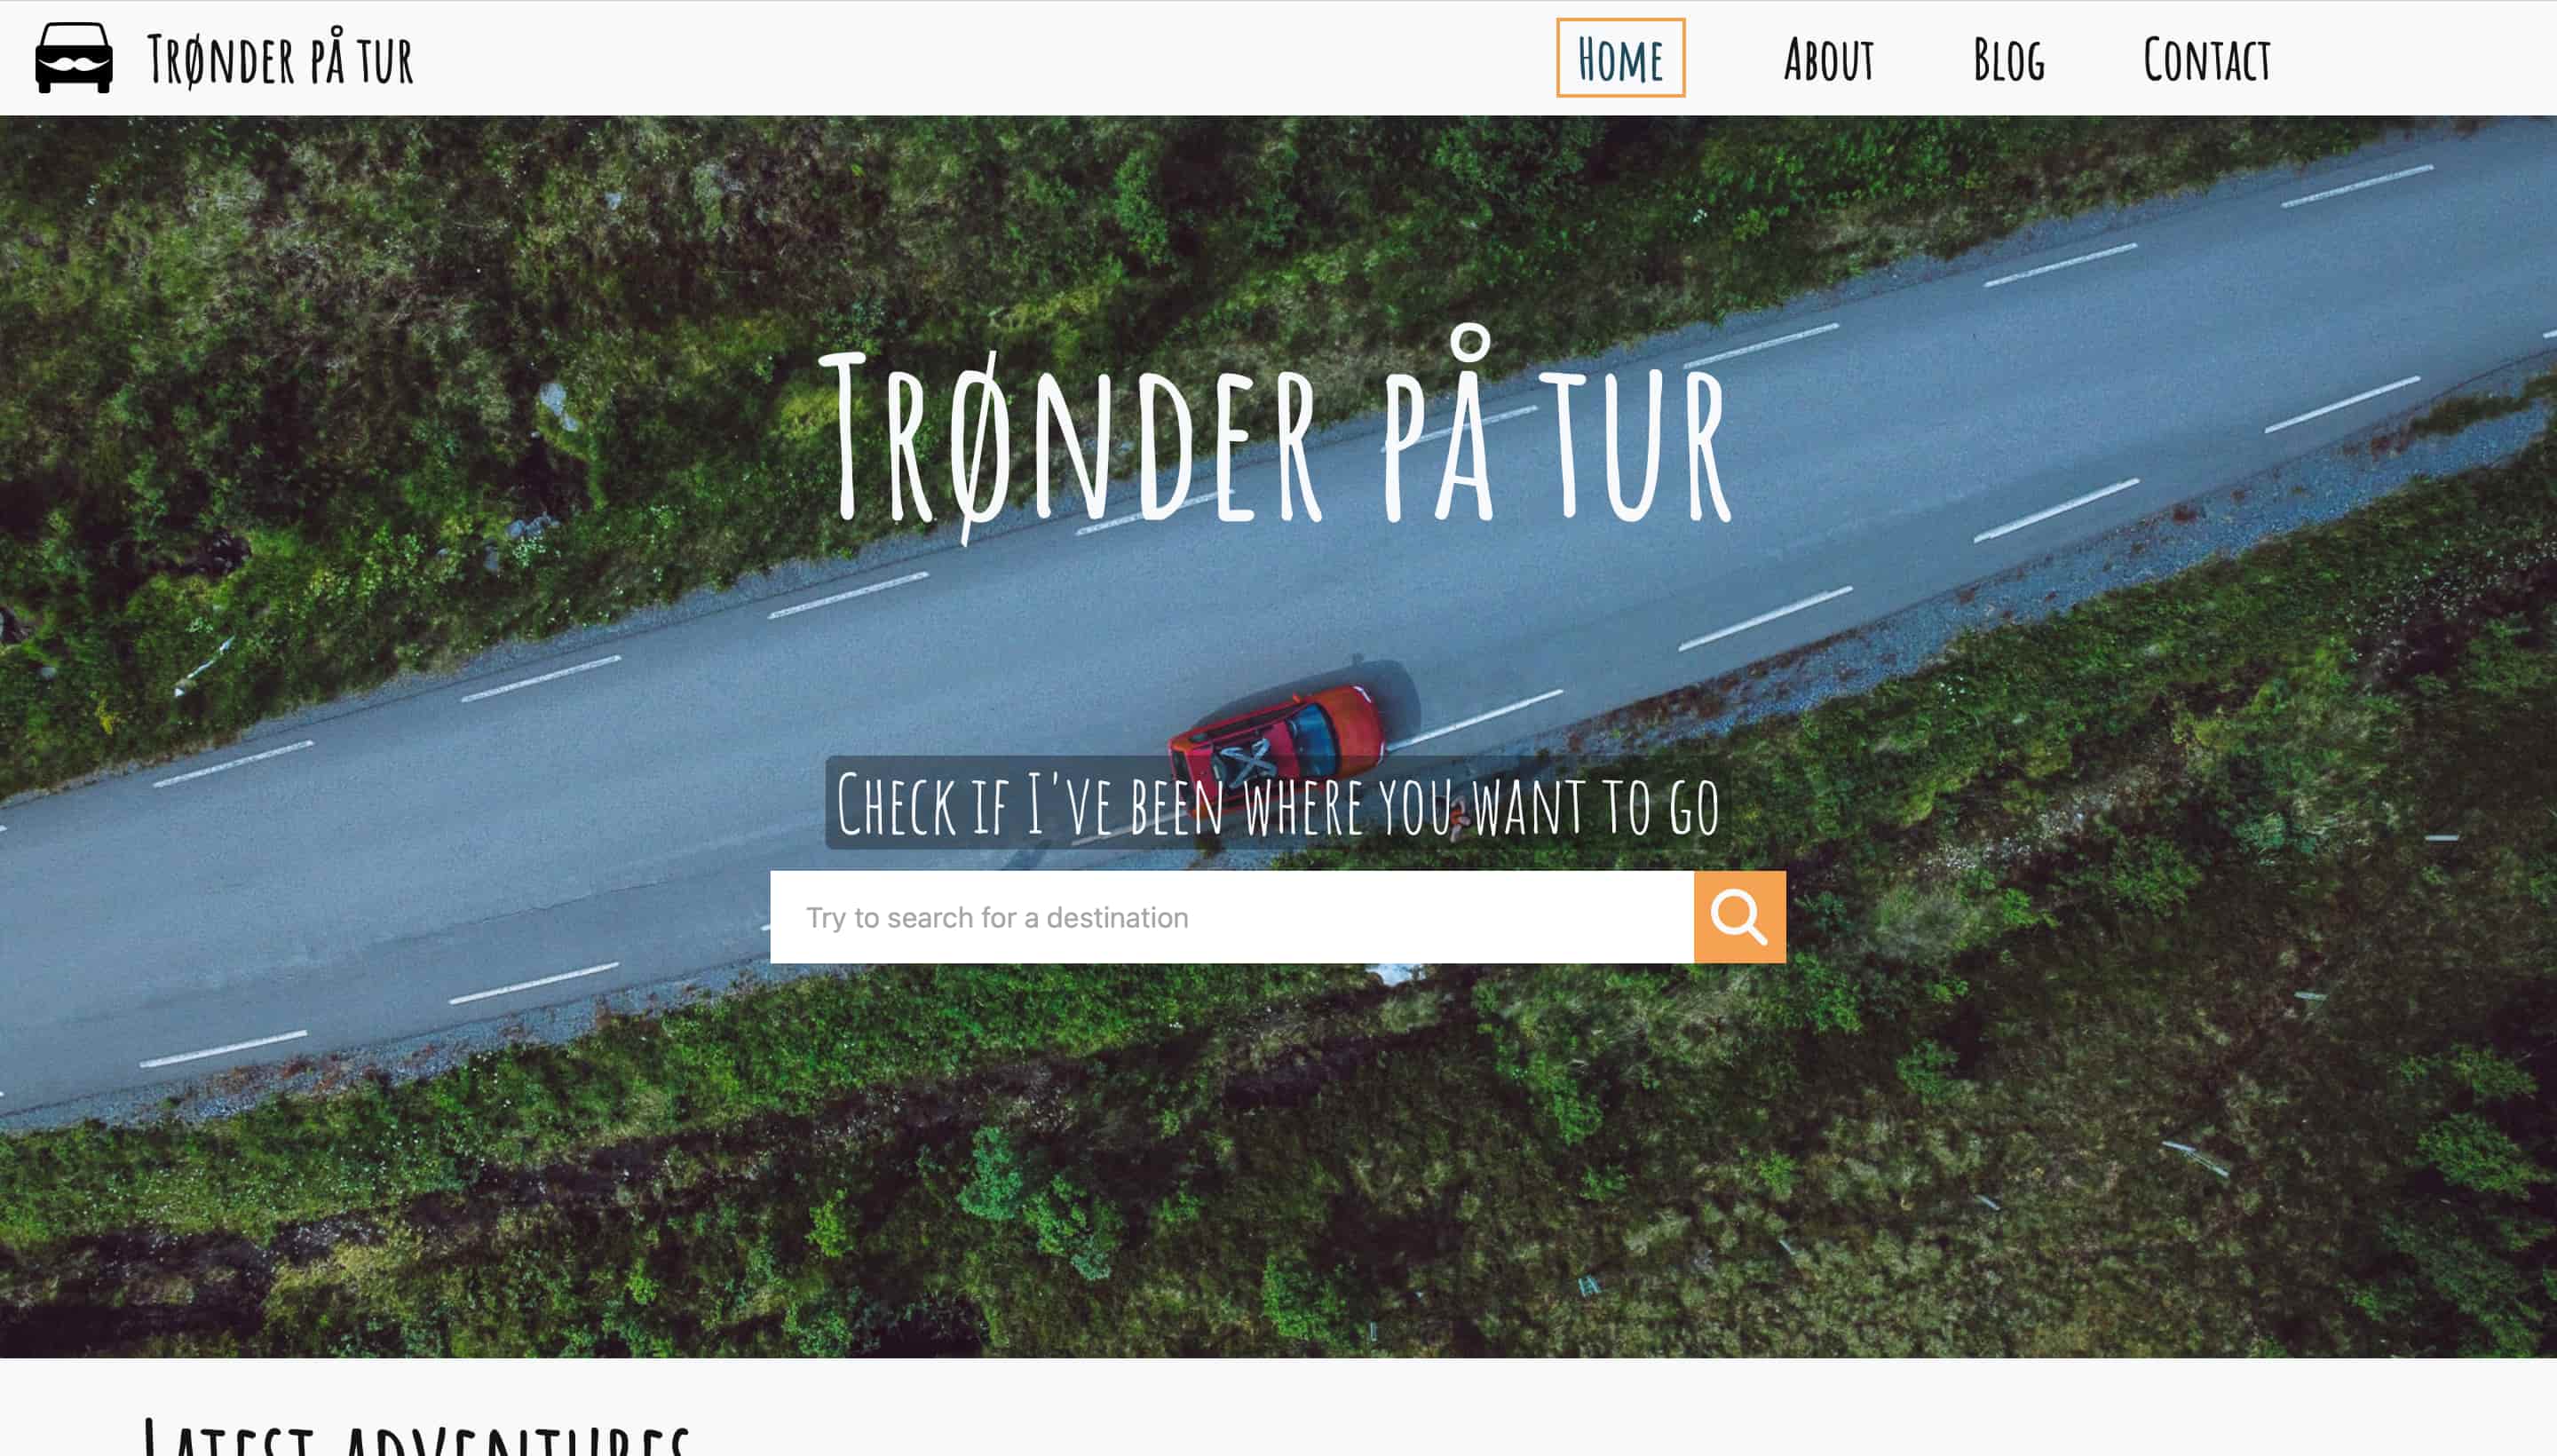 frontpage of the tronder på tur webpage